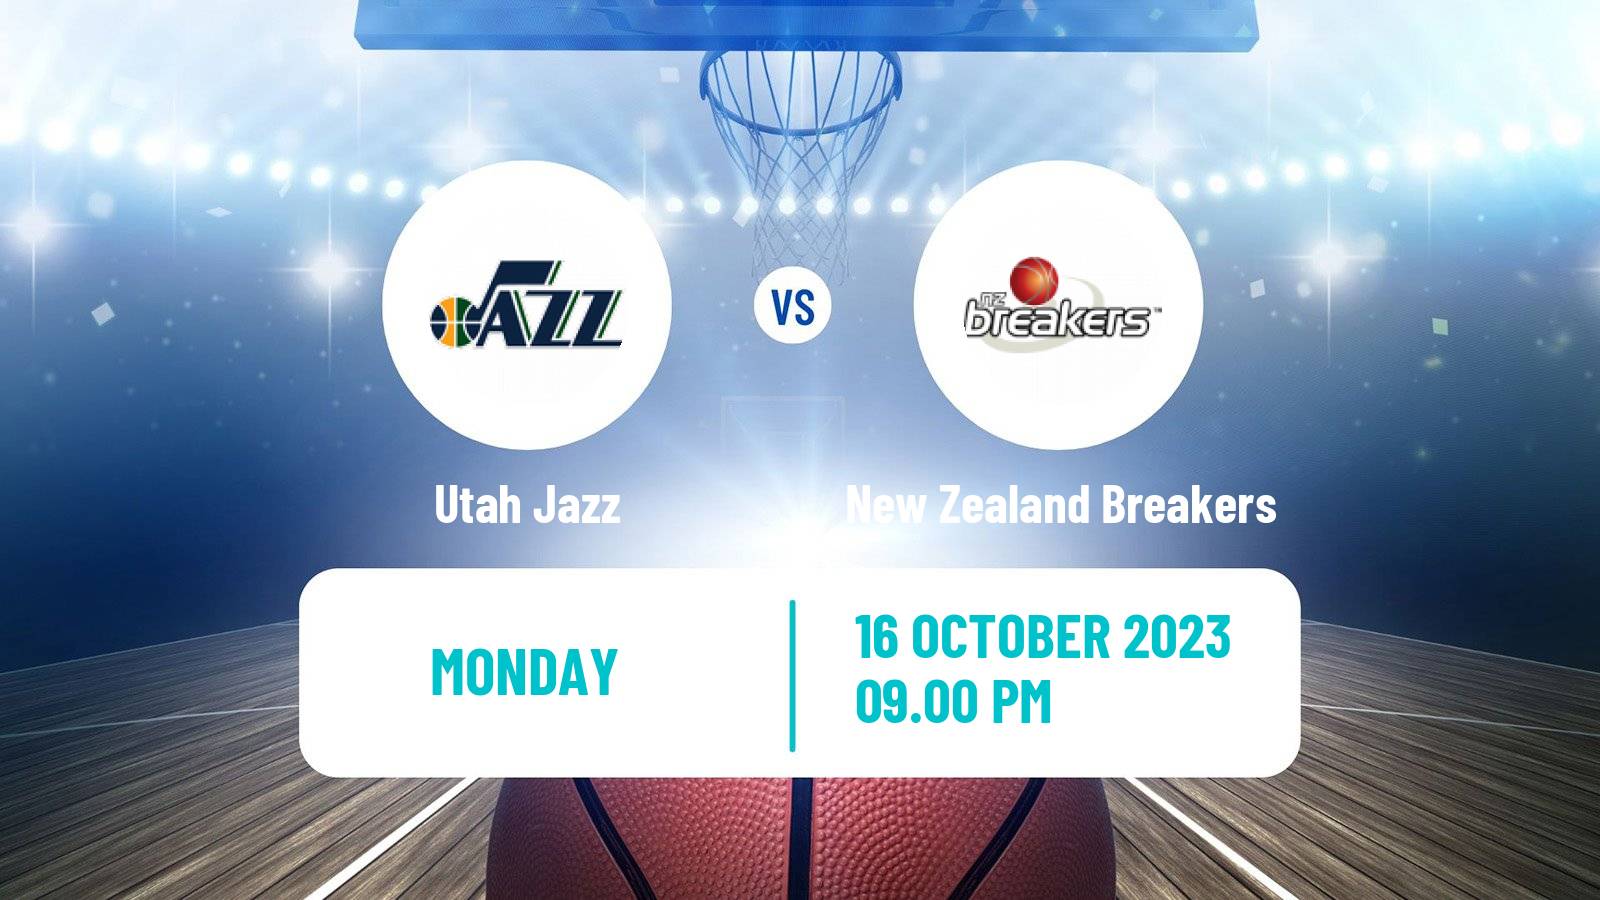 Basketball Club Friendly Basketball Utah Jazz - New Zealand Breakers